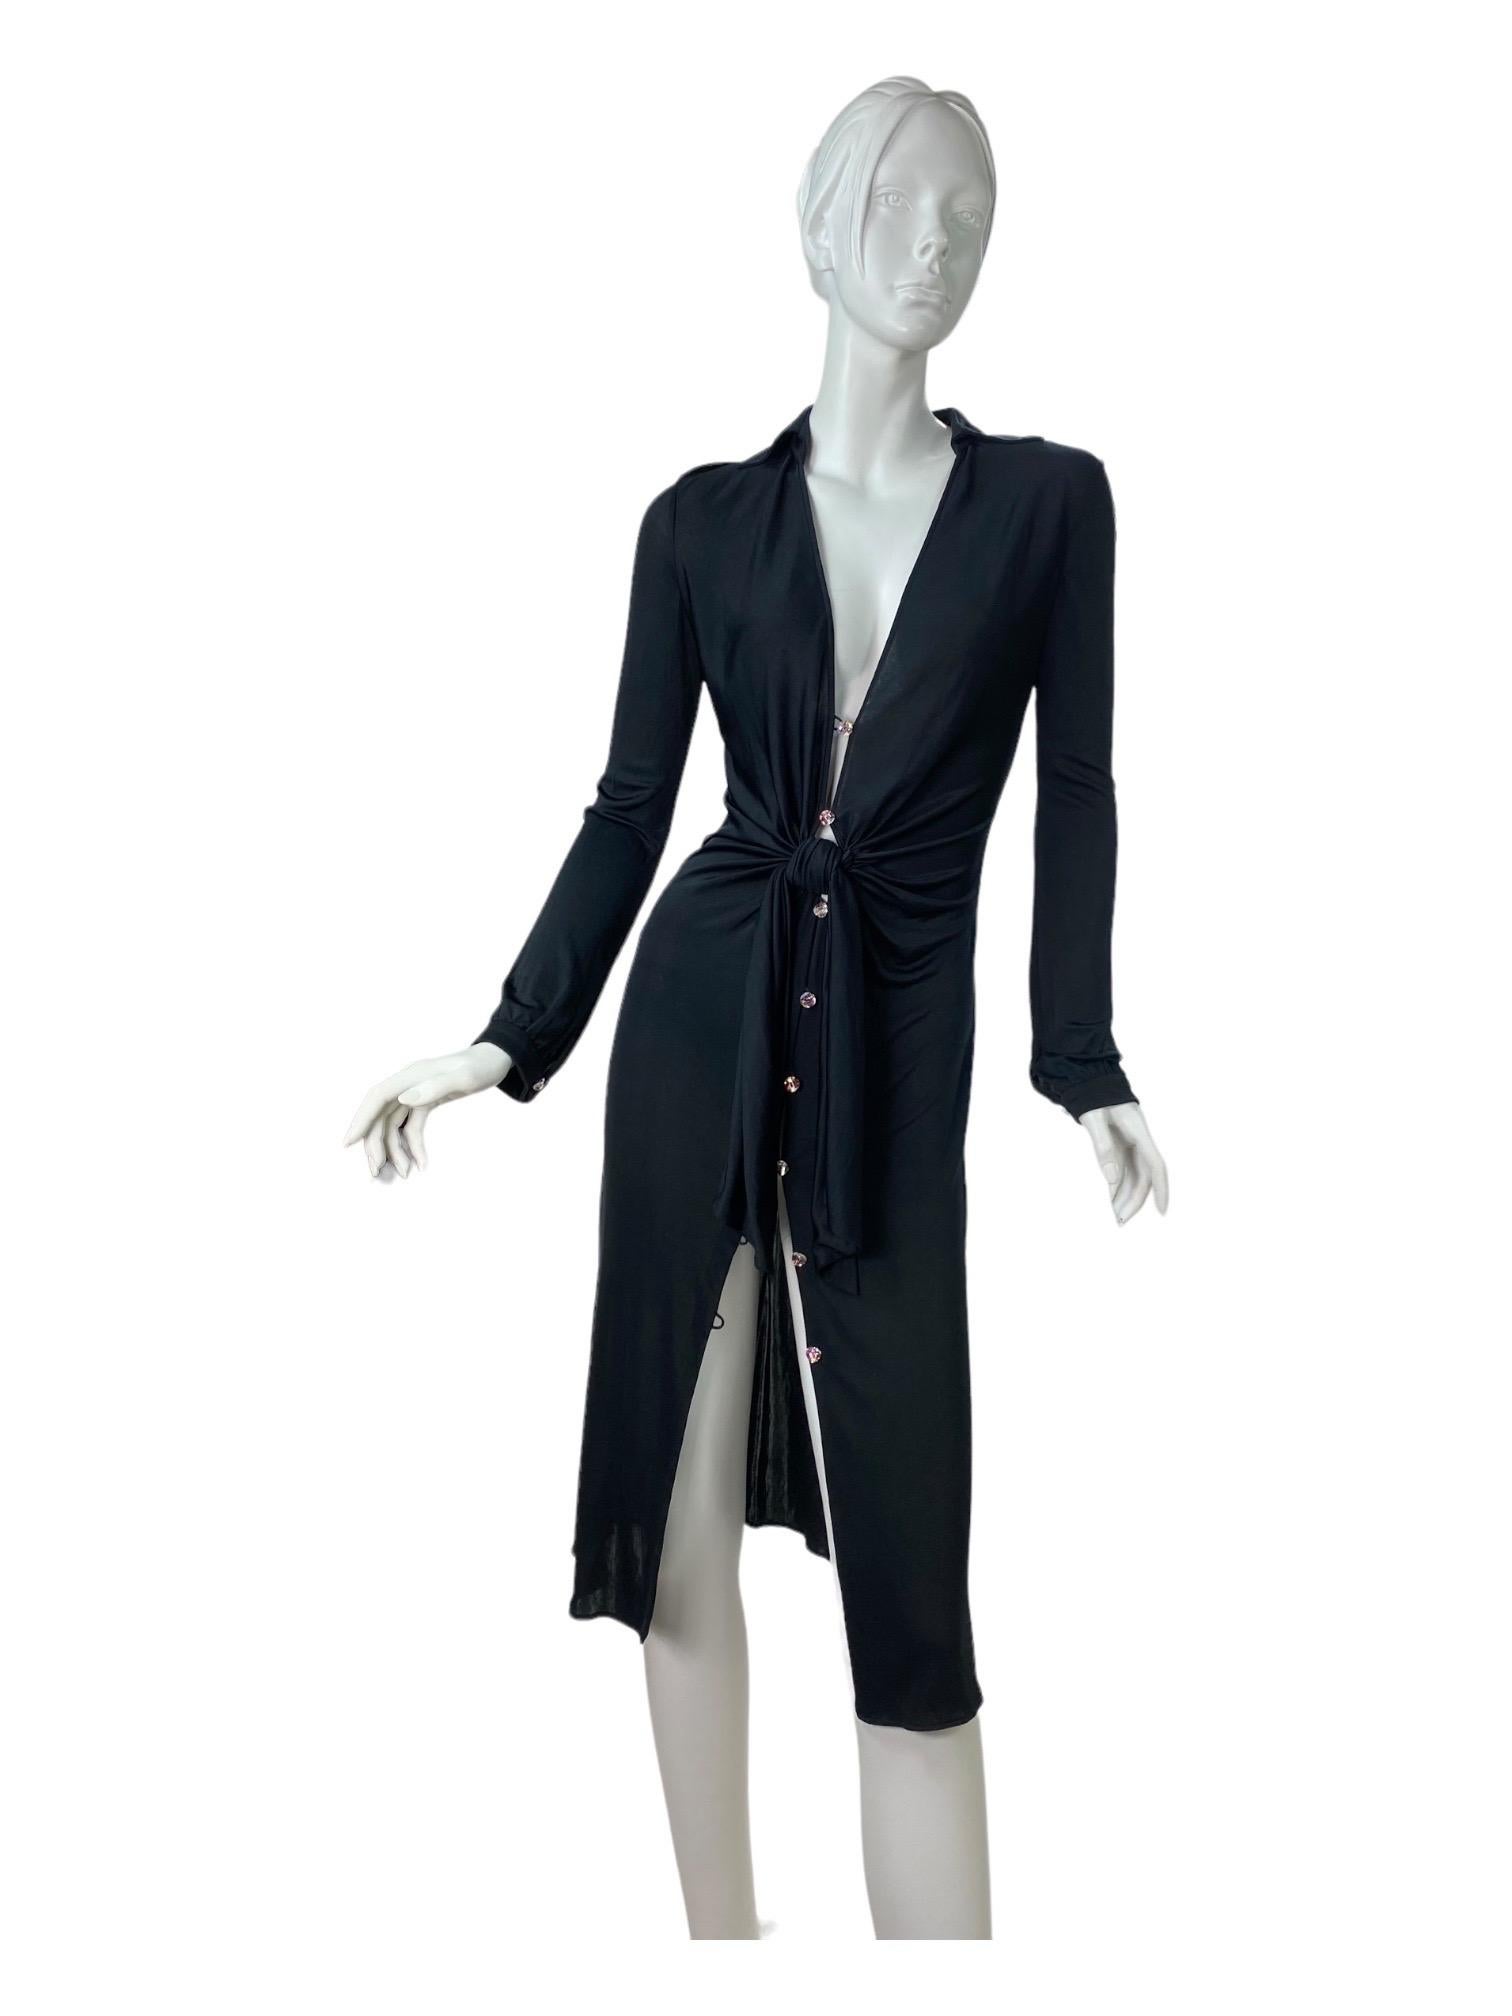 Women's S/S 2000 Vintage Gianni Versace Couture Runway Black Deep V-Neck Dress For Sale